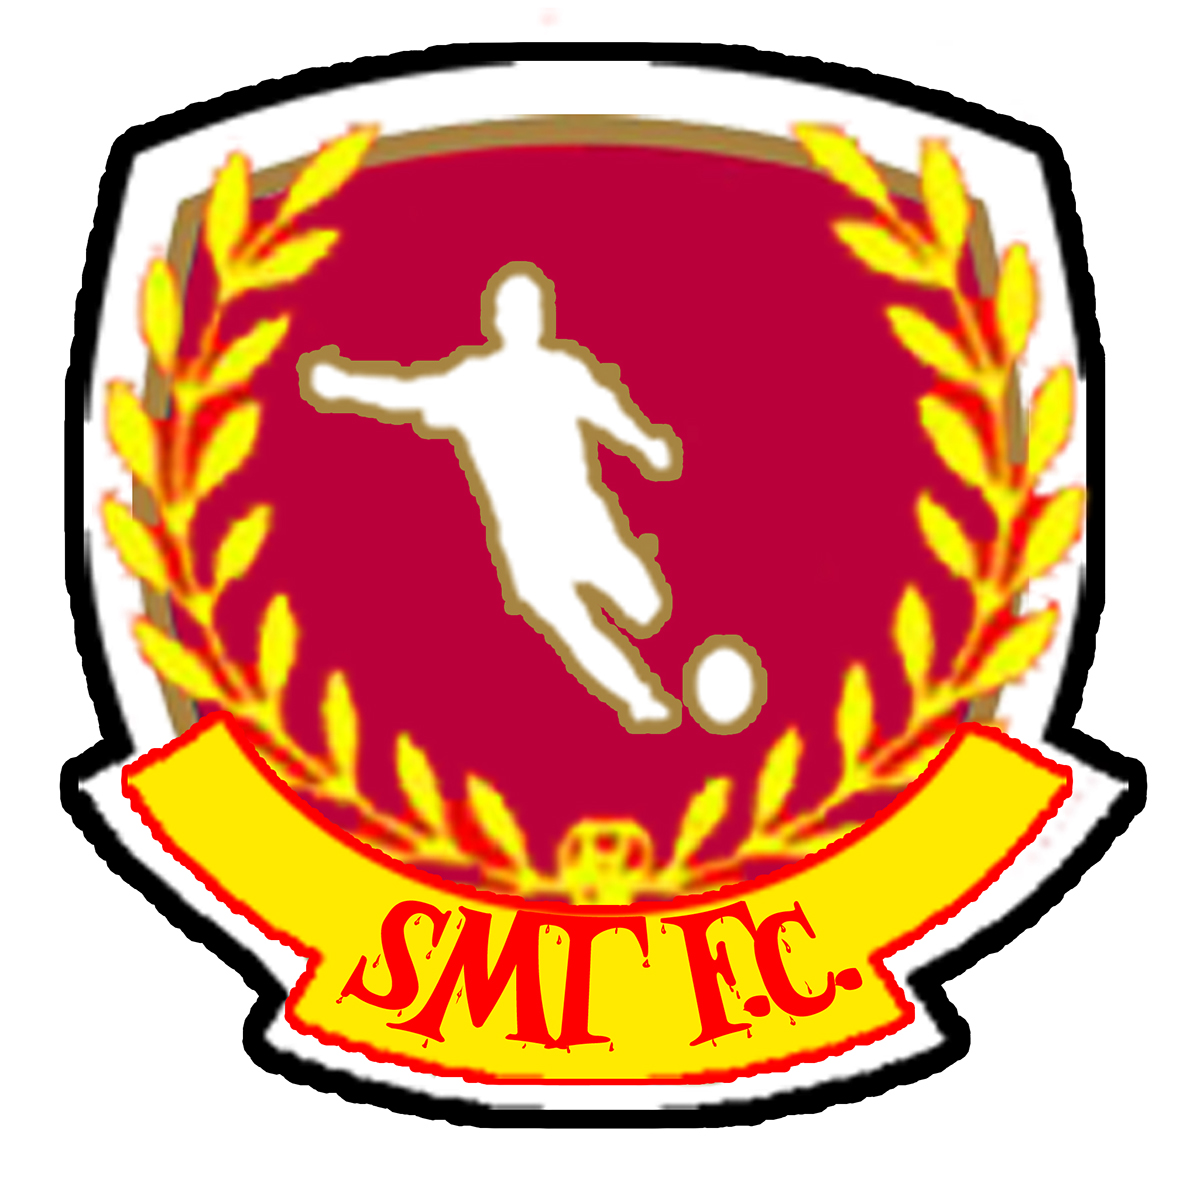 soccer football logo soccer logo Football logo soccer emblem football emblem emblem smk ttdi jaya united